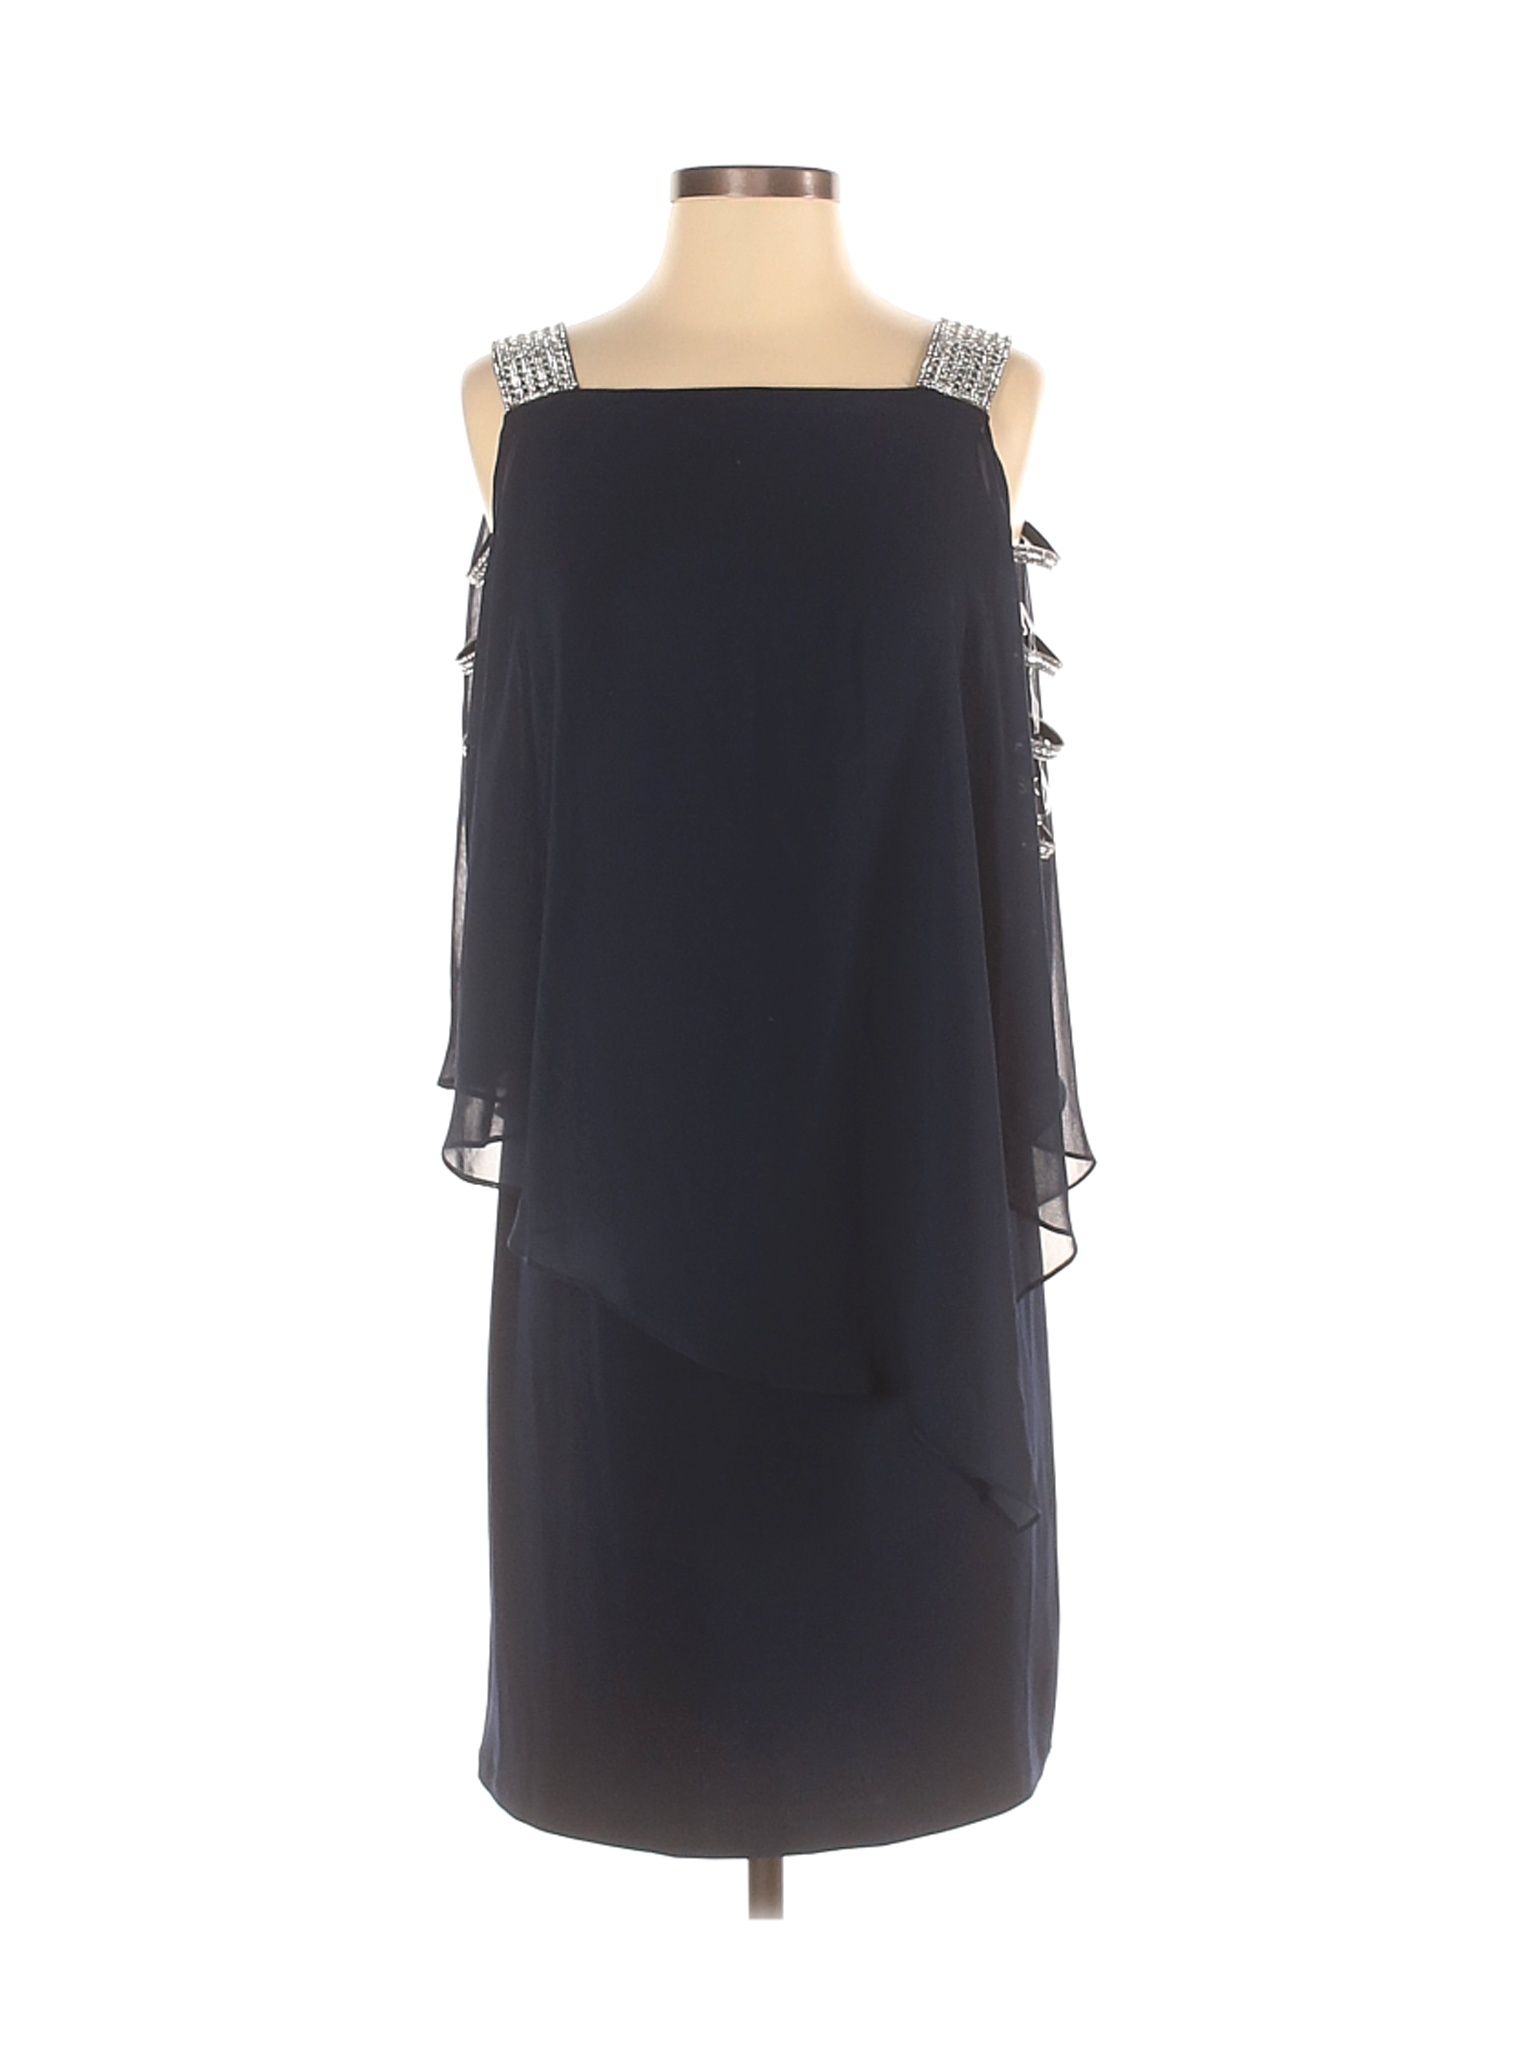 NWT MSK Women Black Cocktail Dress S | eBay